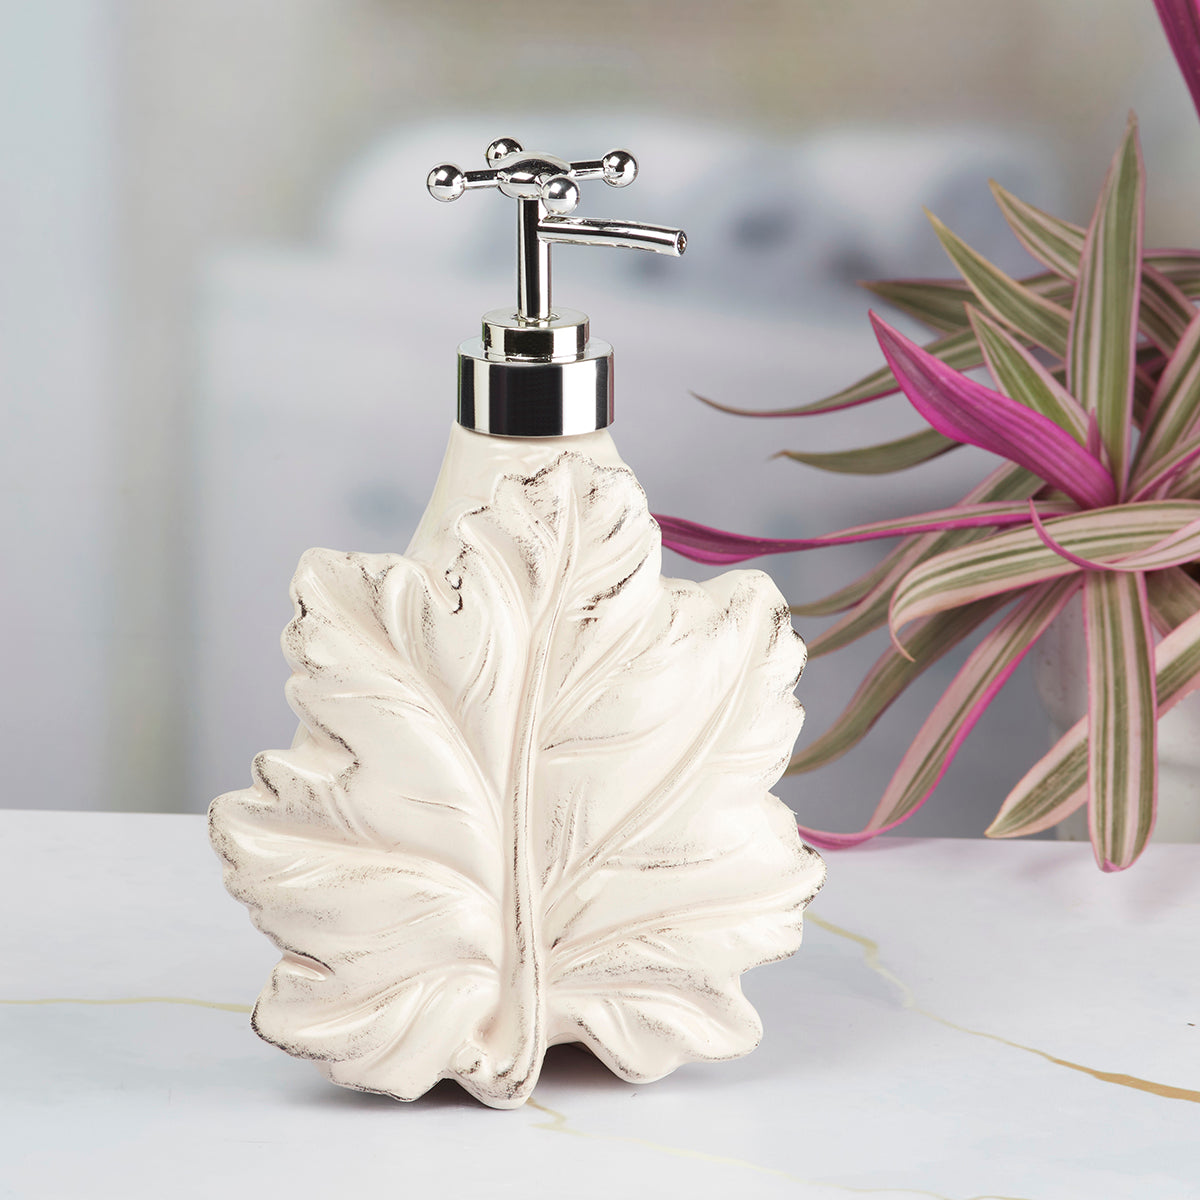 Ceramic Soap Dispenser handwash Pump for Bathroom, Set of 1, Beige (8638)